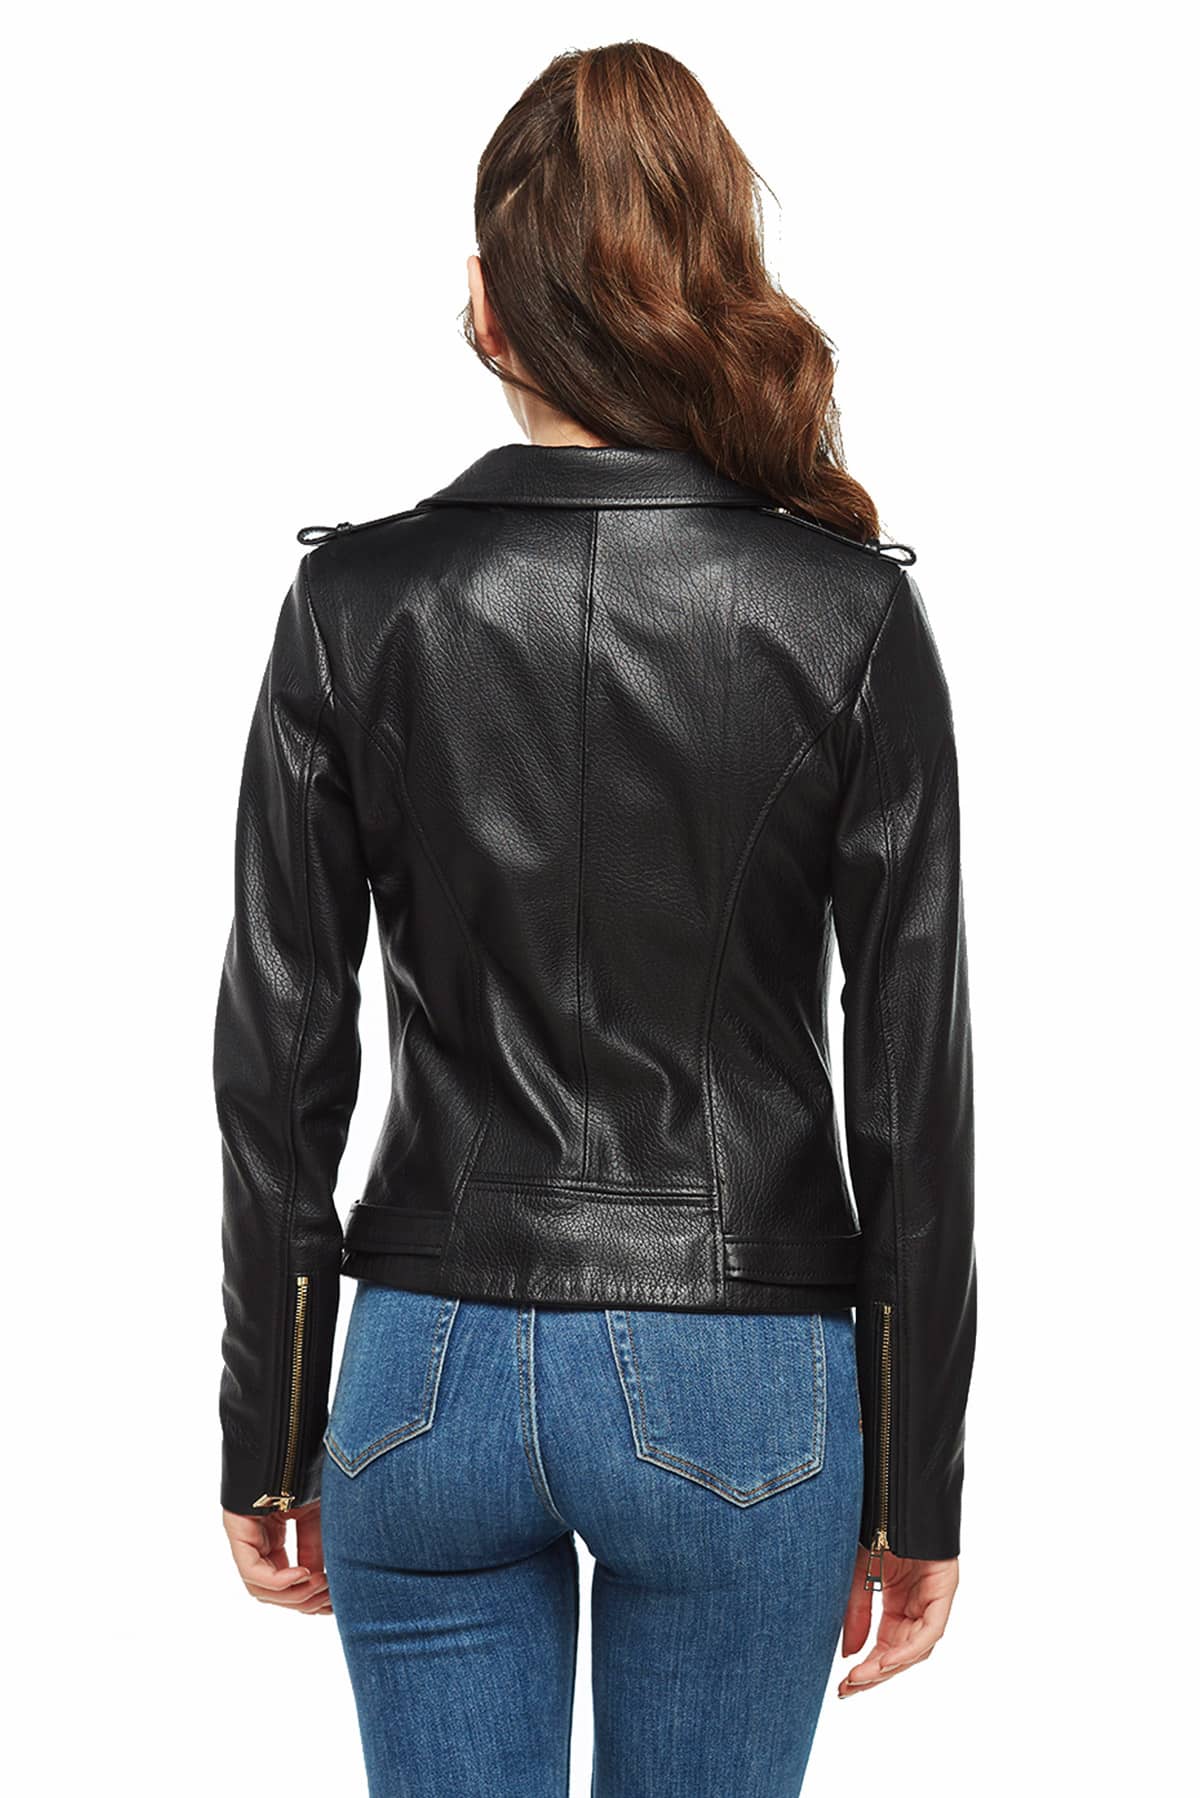 Vivian Women's 100 % Real Black Leather Classic Jacket